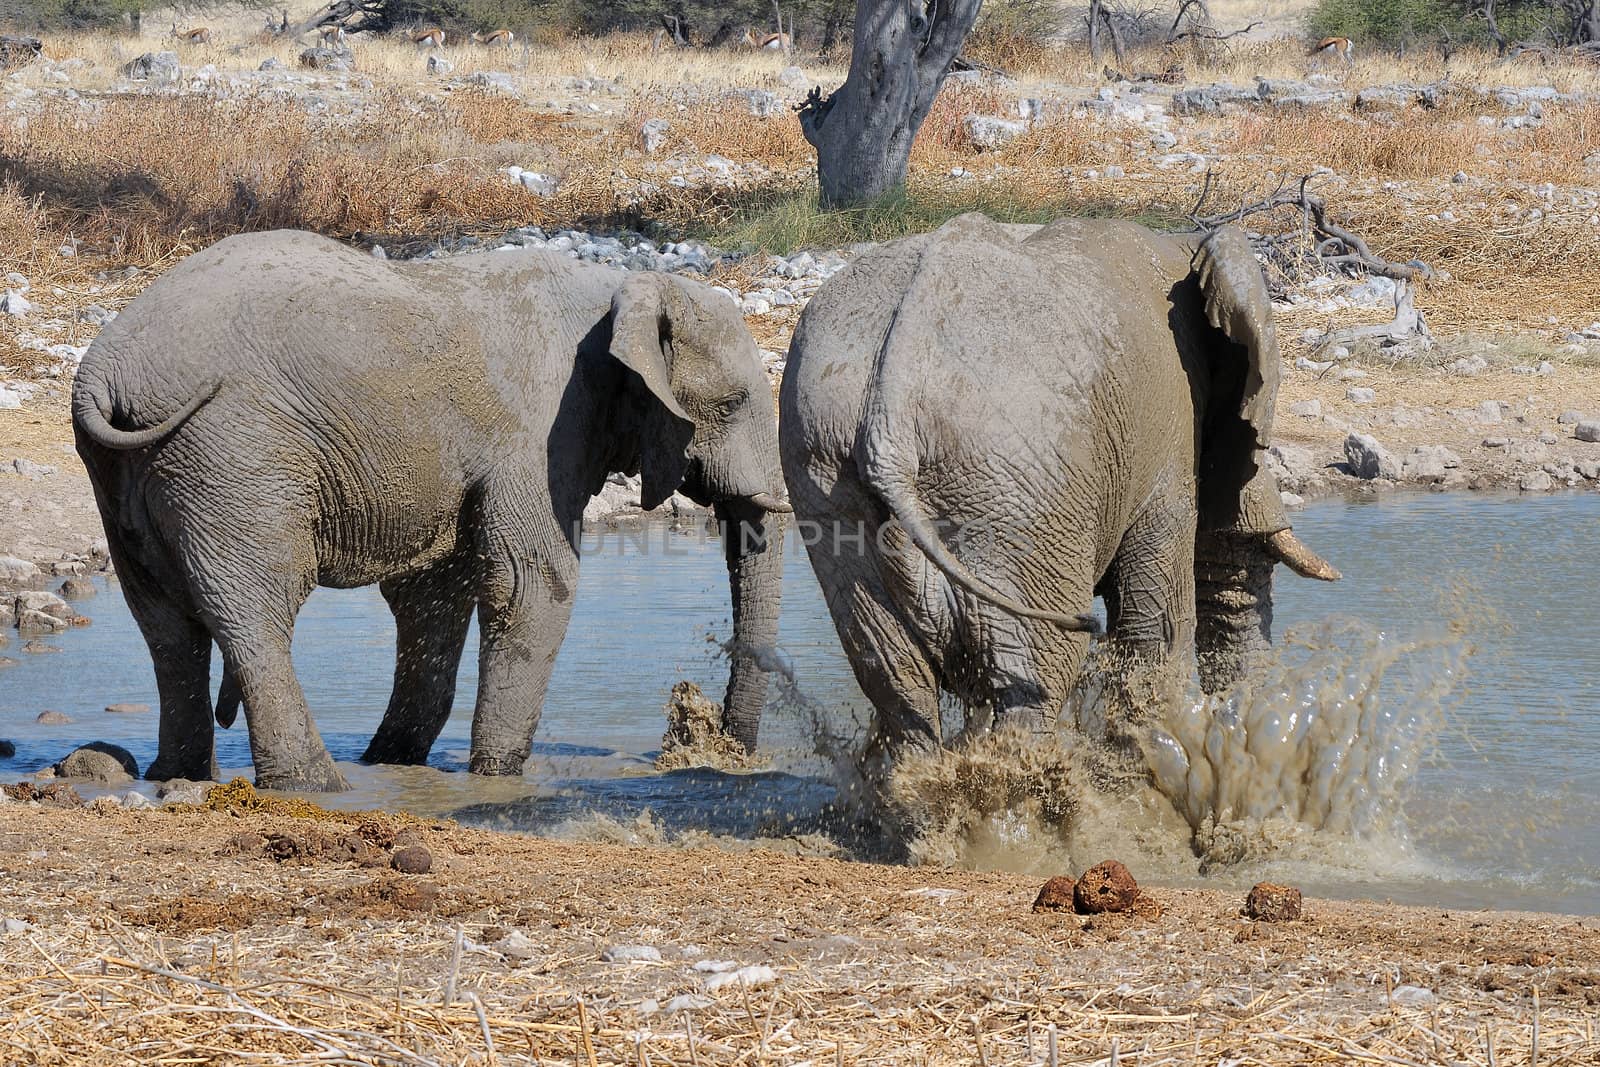 An Elephant taking a mud bath at the Okaukeujo waterhole, Etosha National Park, Namibia